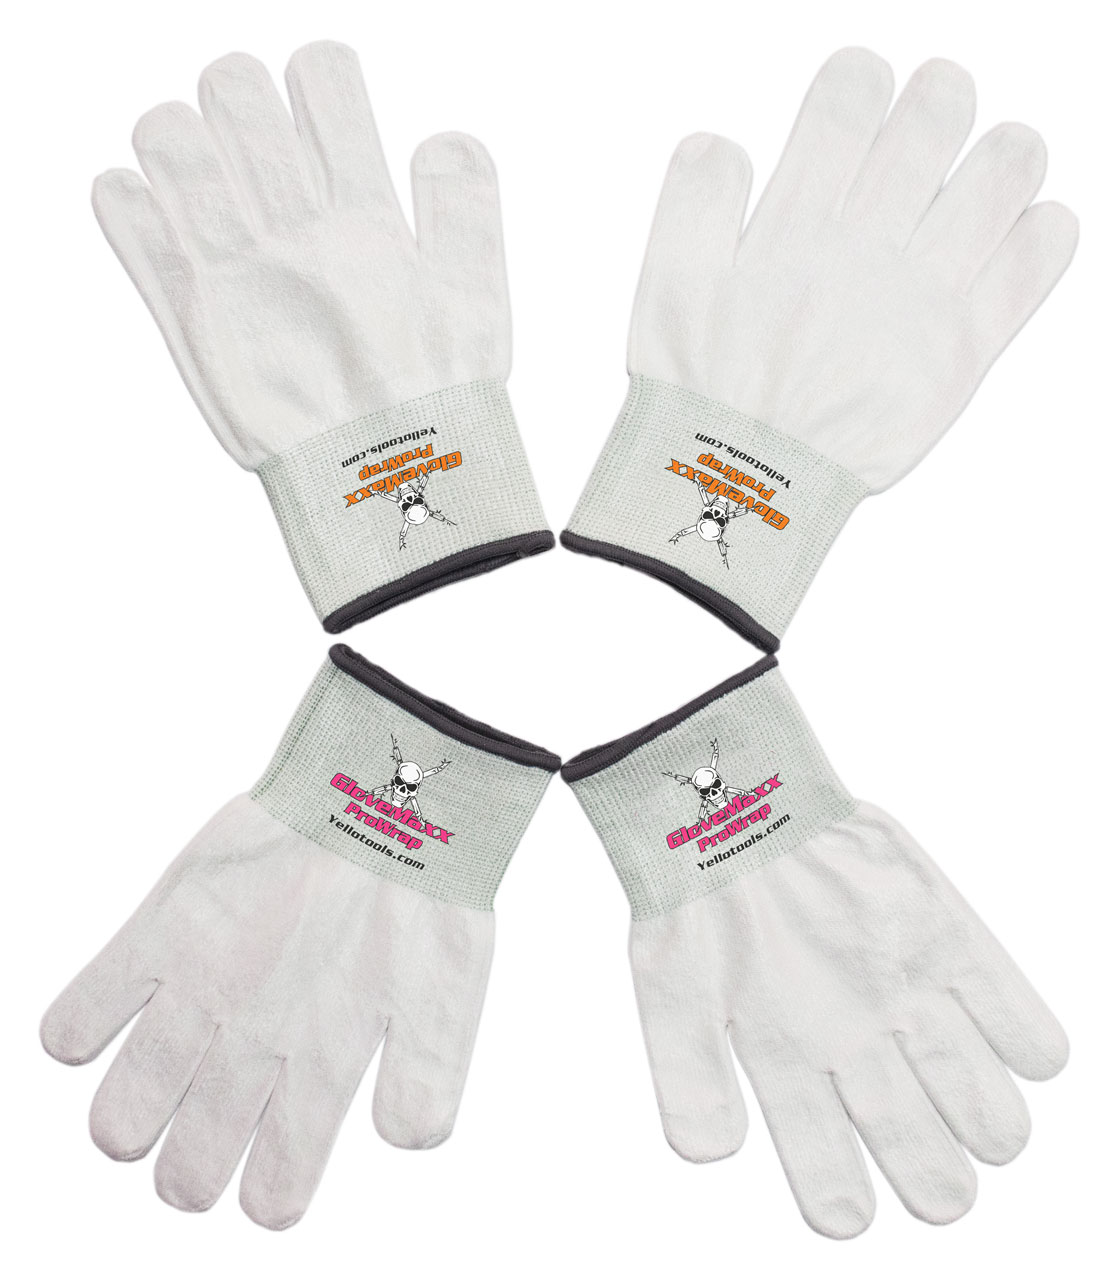 GloveMaxx ProWrap vinyl wrap gloves